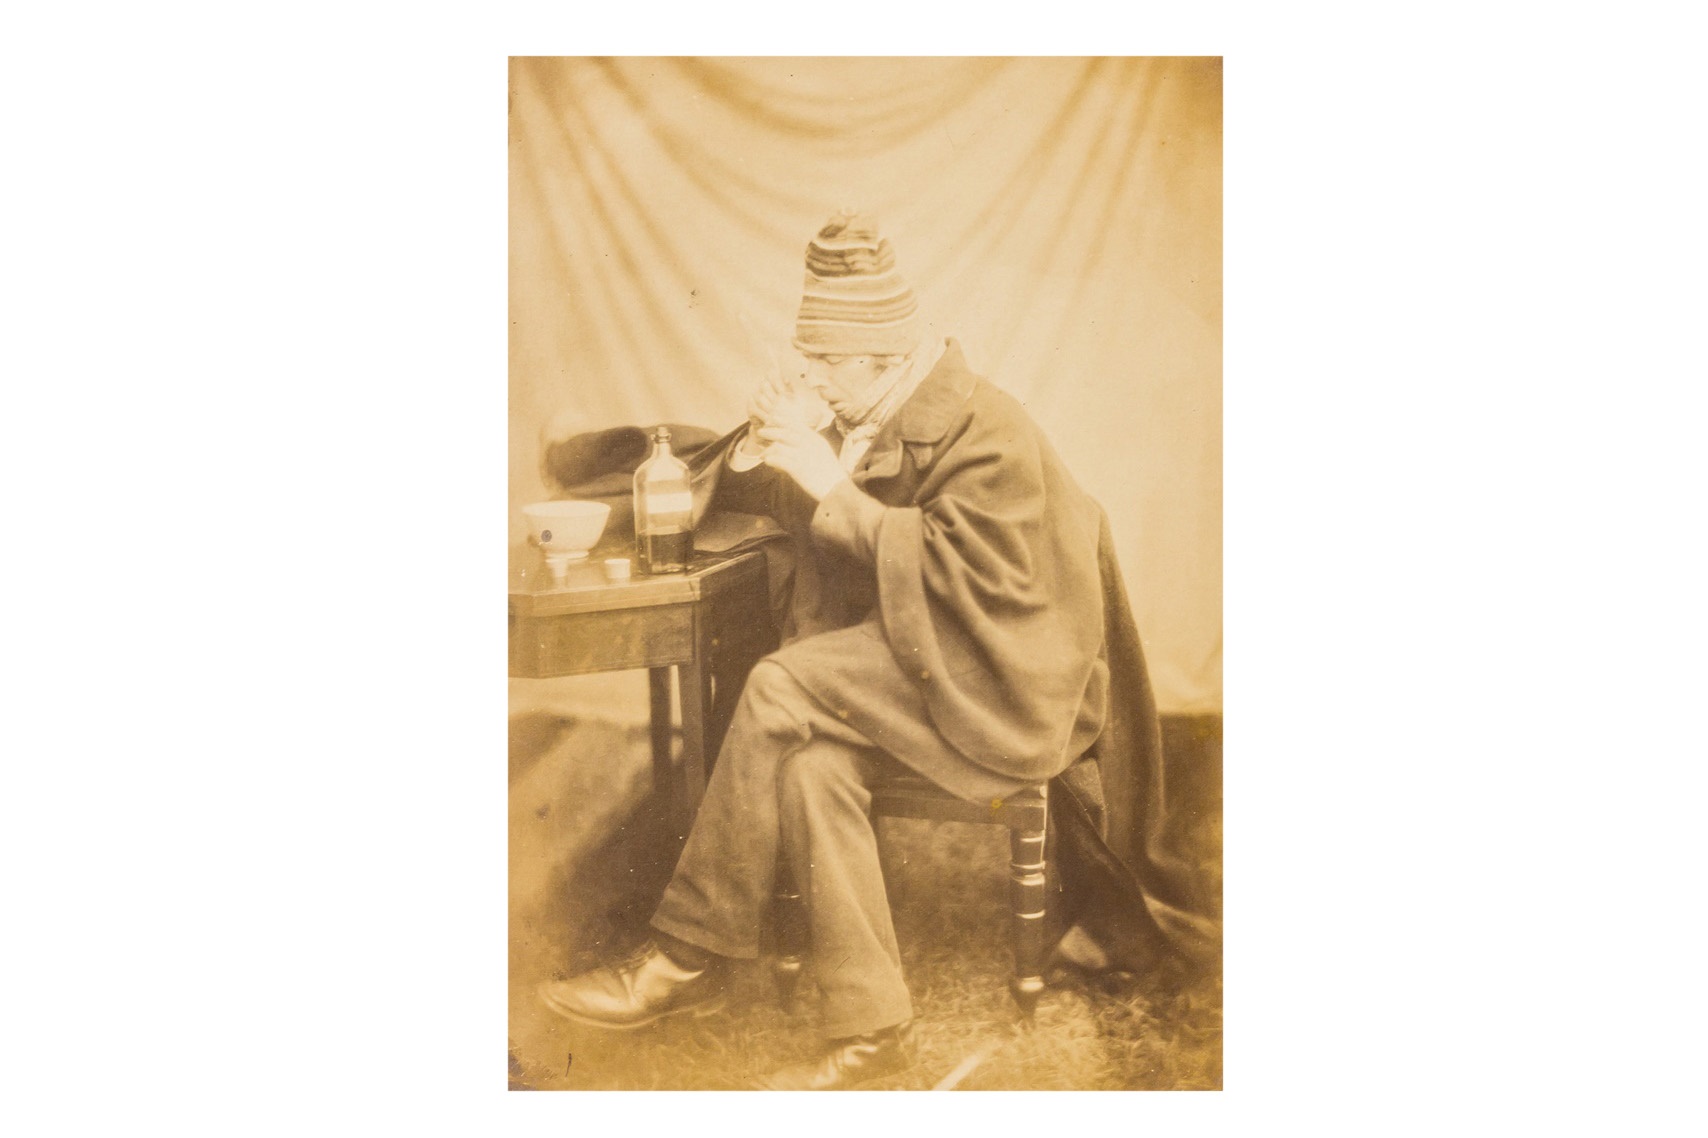 Photographer unknown, c.1880